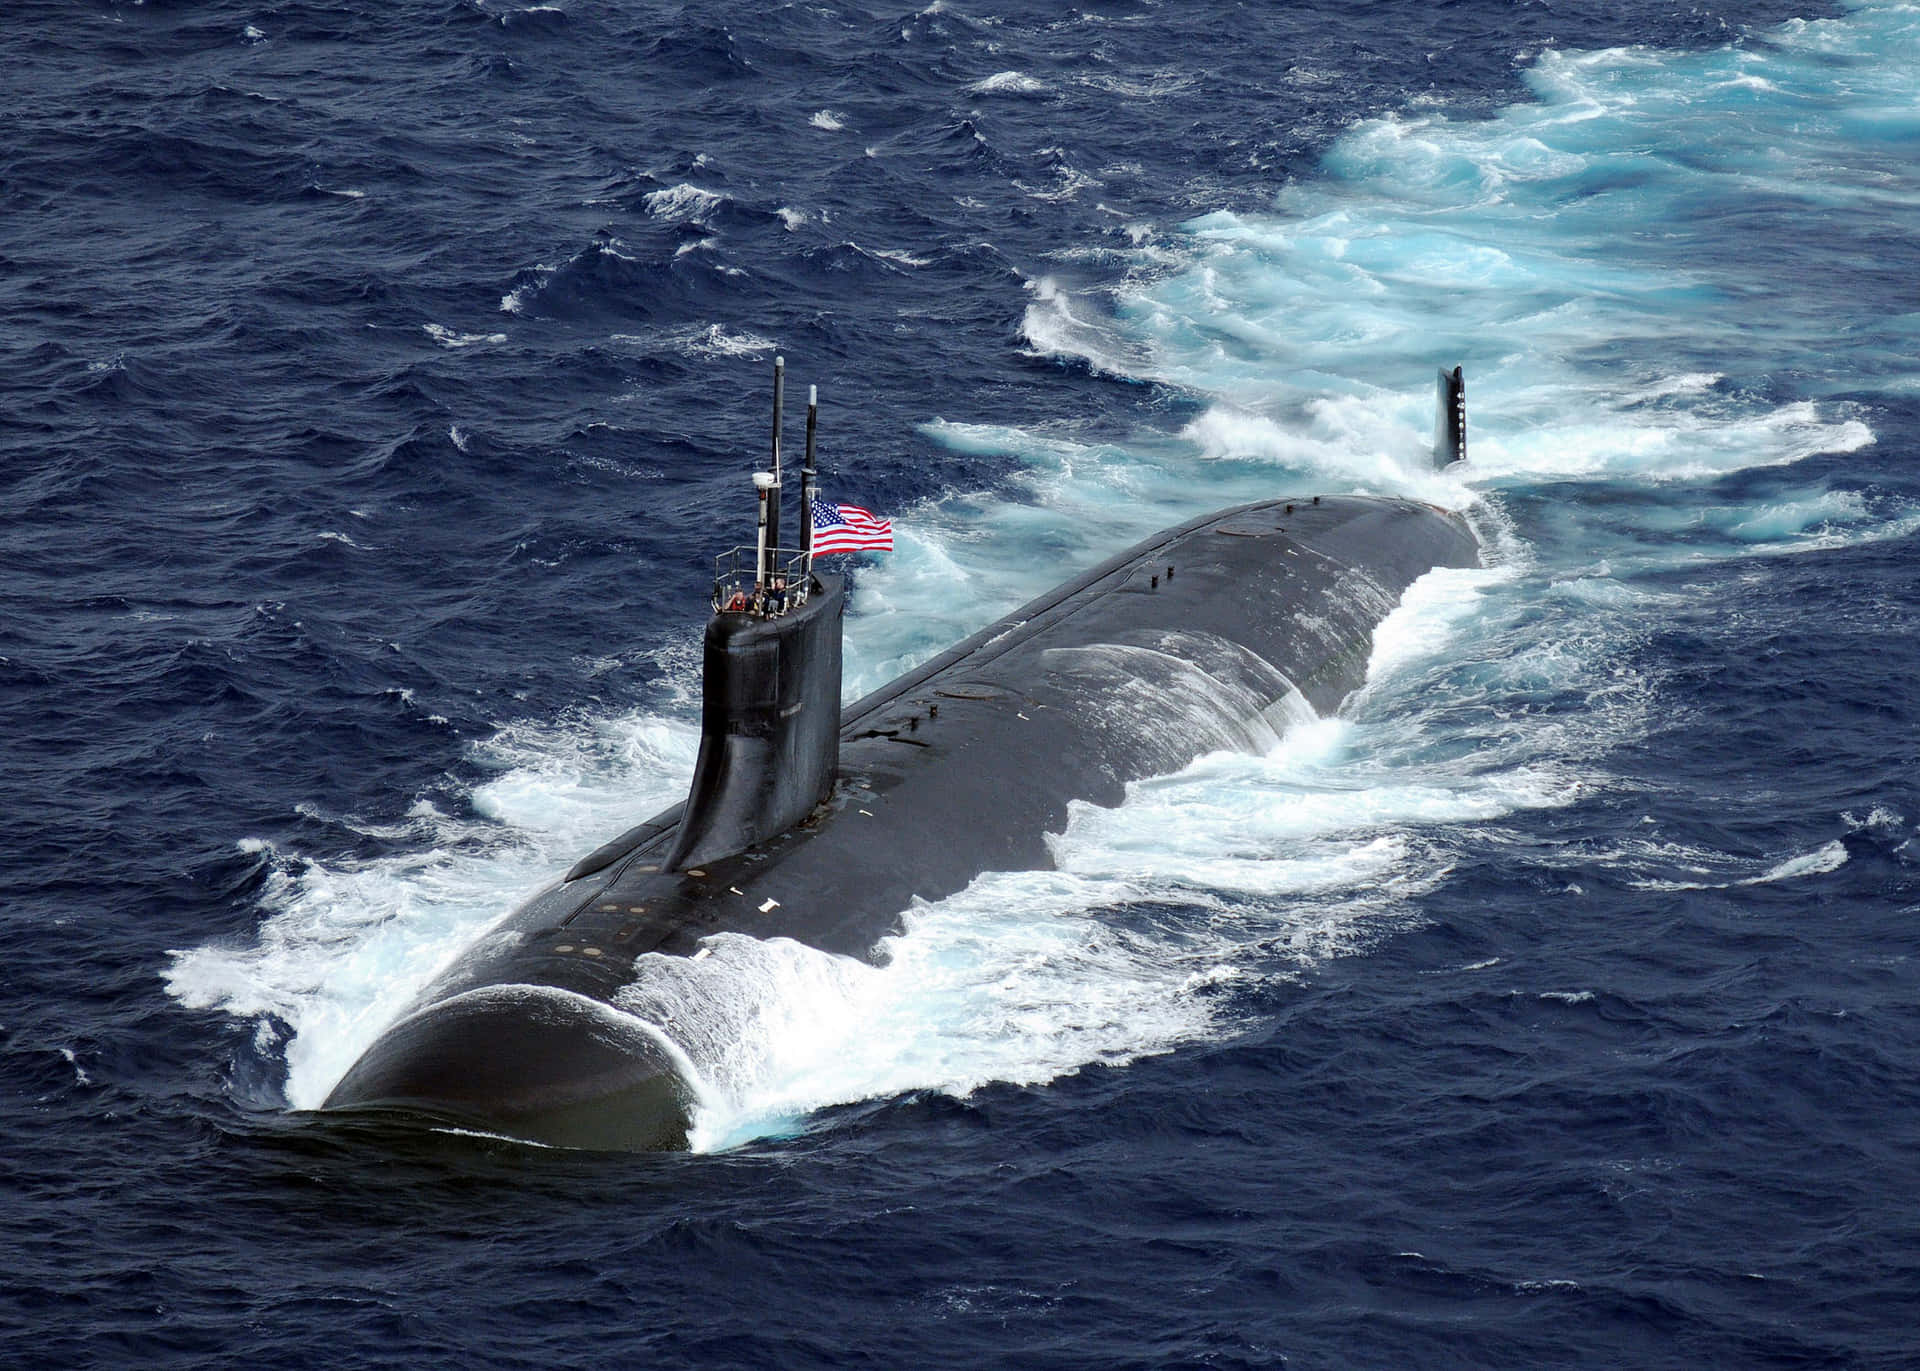 A Black Submarine In The Ocean